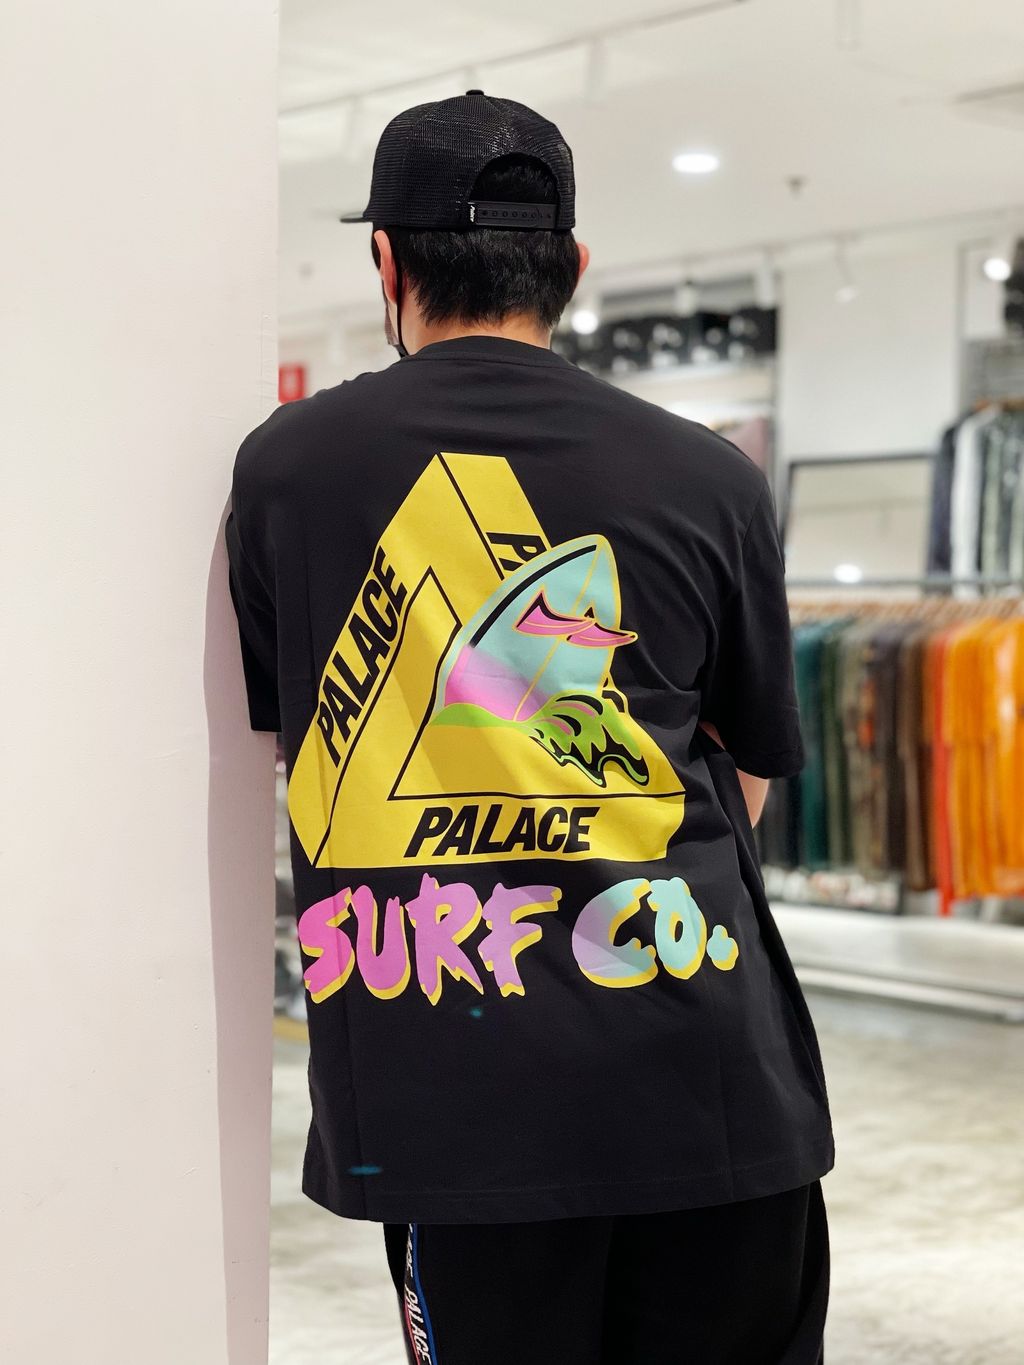 PALACE TRI-SURF CO T-SHIRT - BLACK – THE FOURHEADS